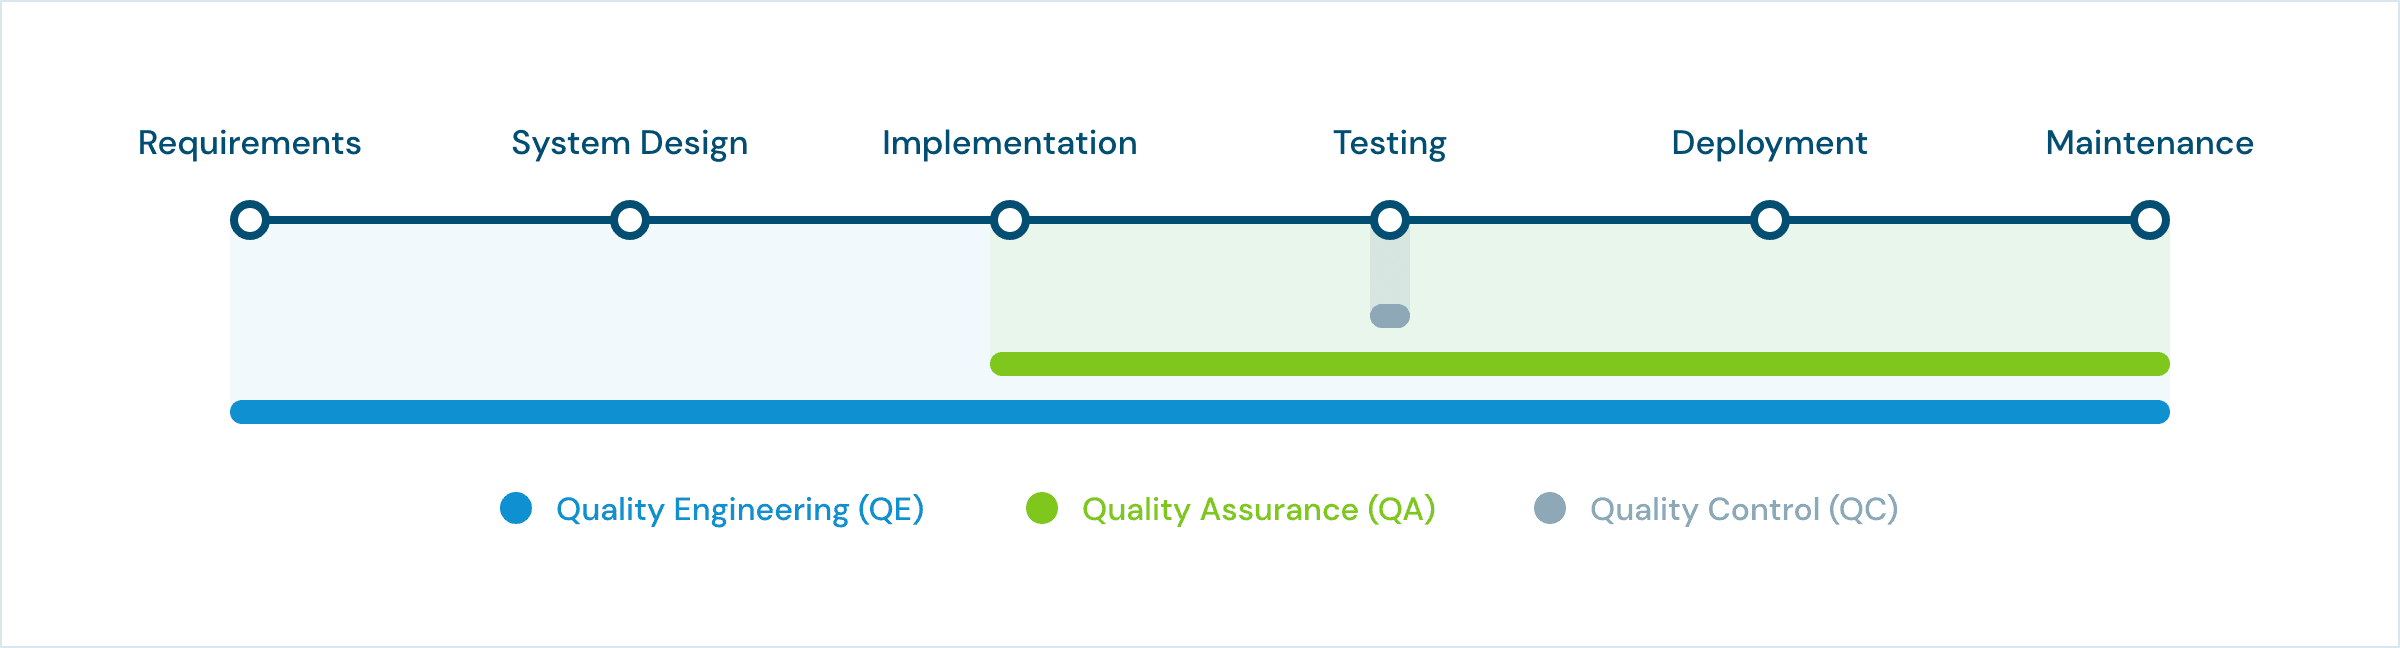 Software development process vs quality systems